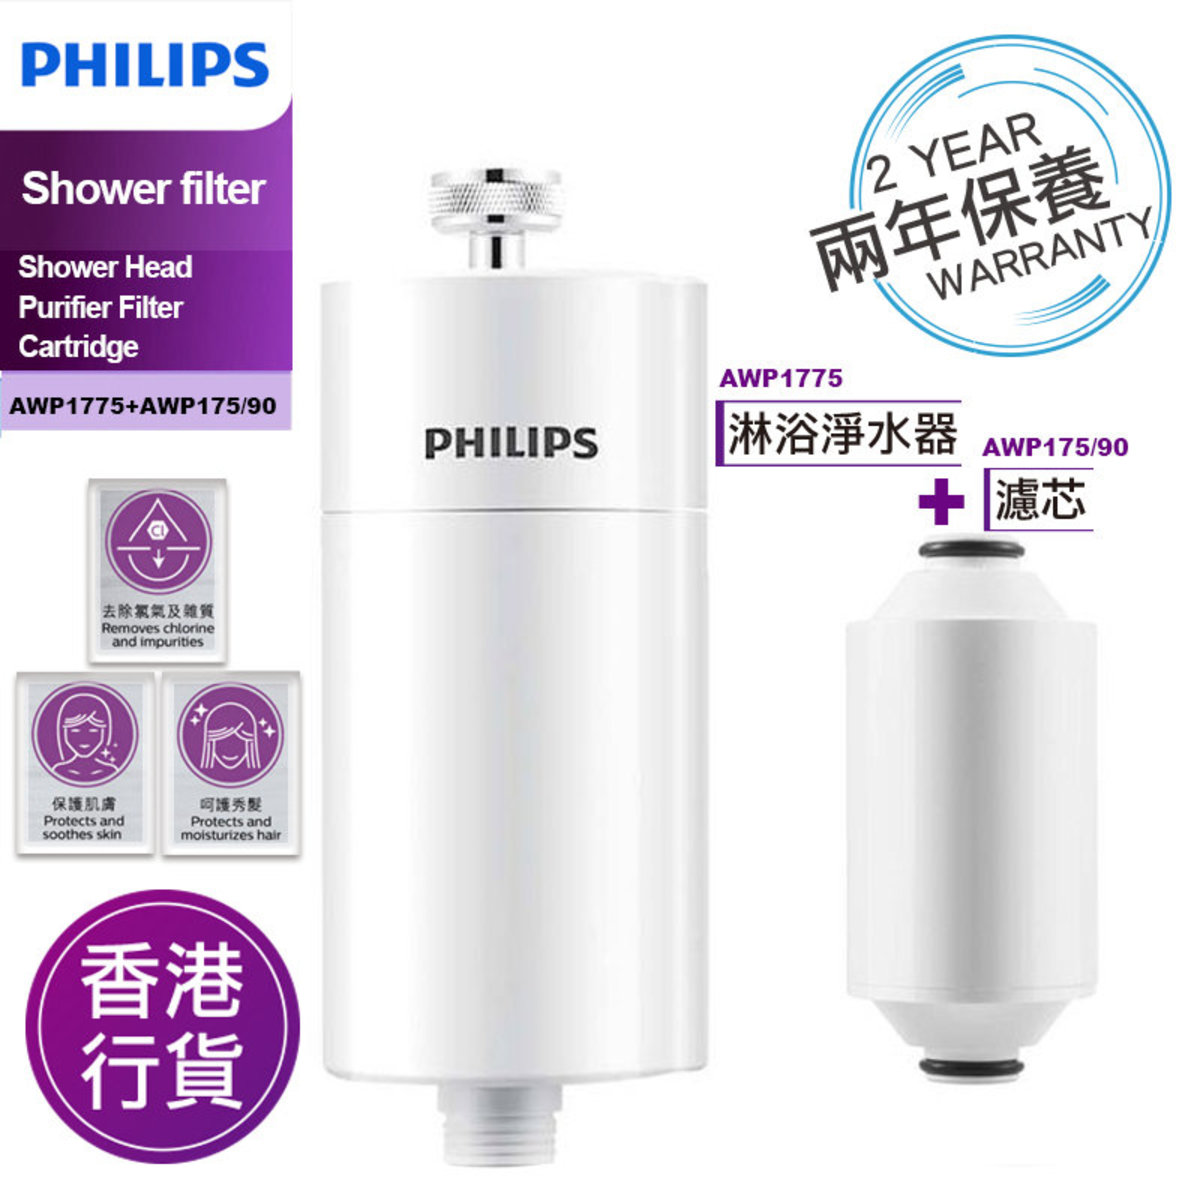 Philips Shower Filter AWP1775 (Shower Filter Water Filter